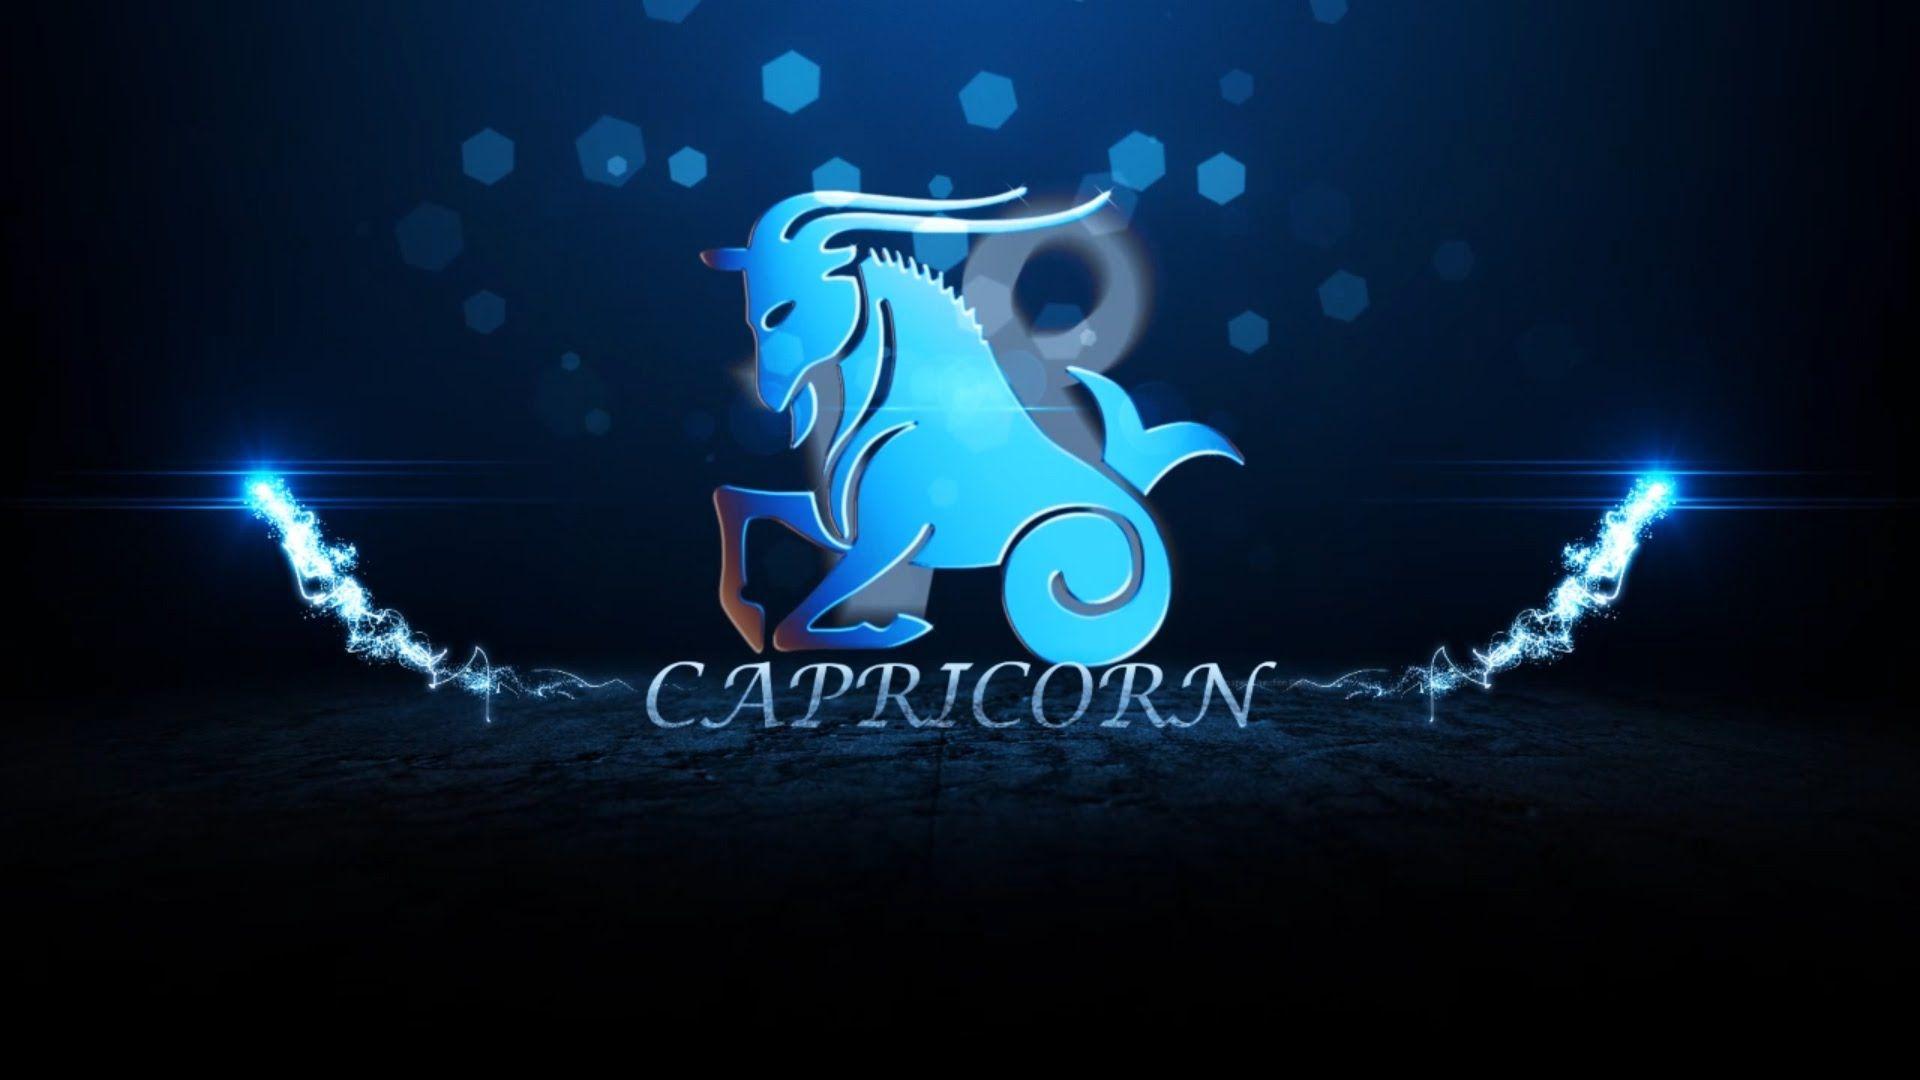 Capricorn Horoscope Wallpaper. Beautiful image HD Picture